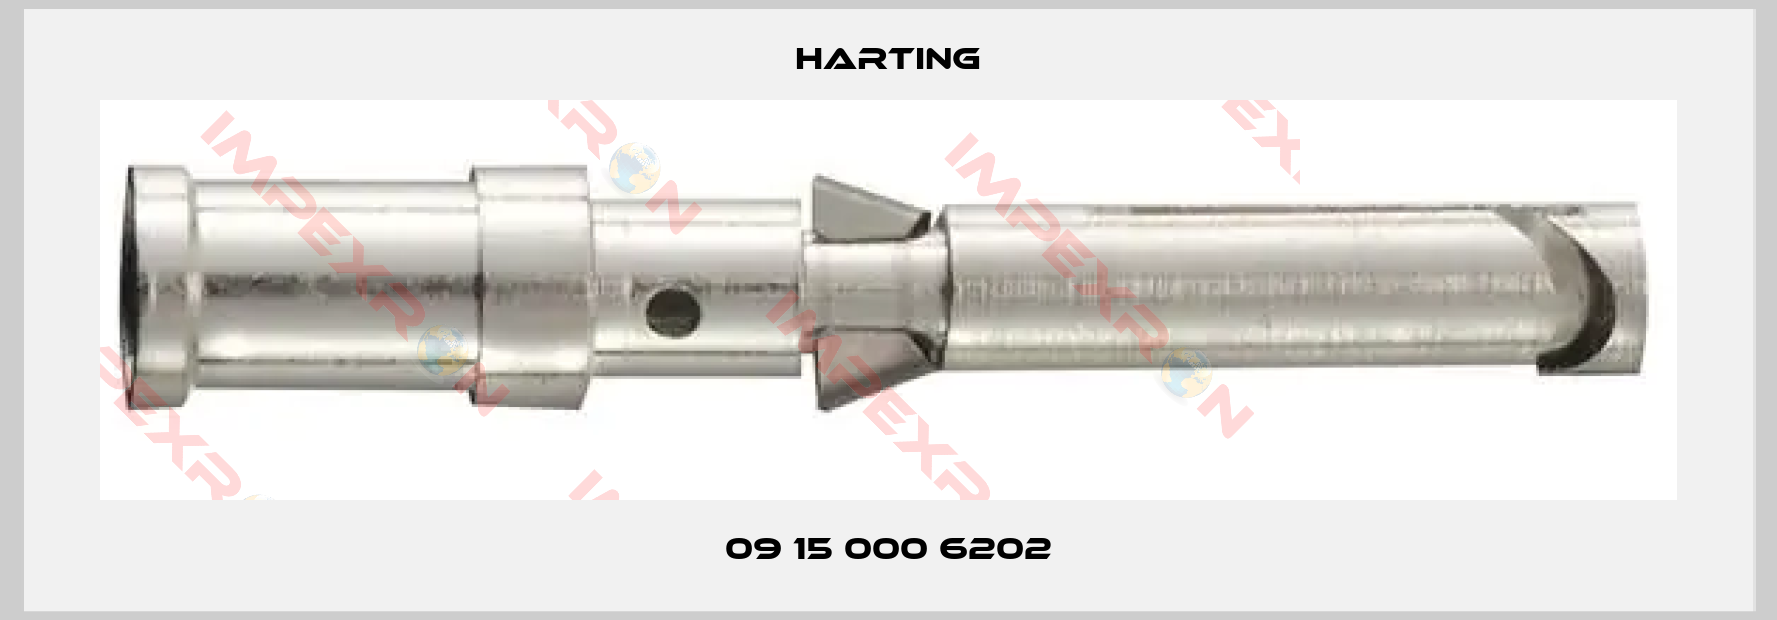 Harting-09 15 000 6202